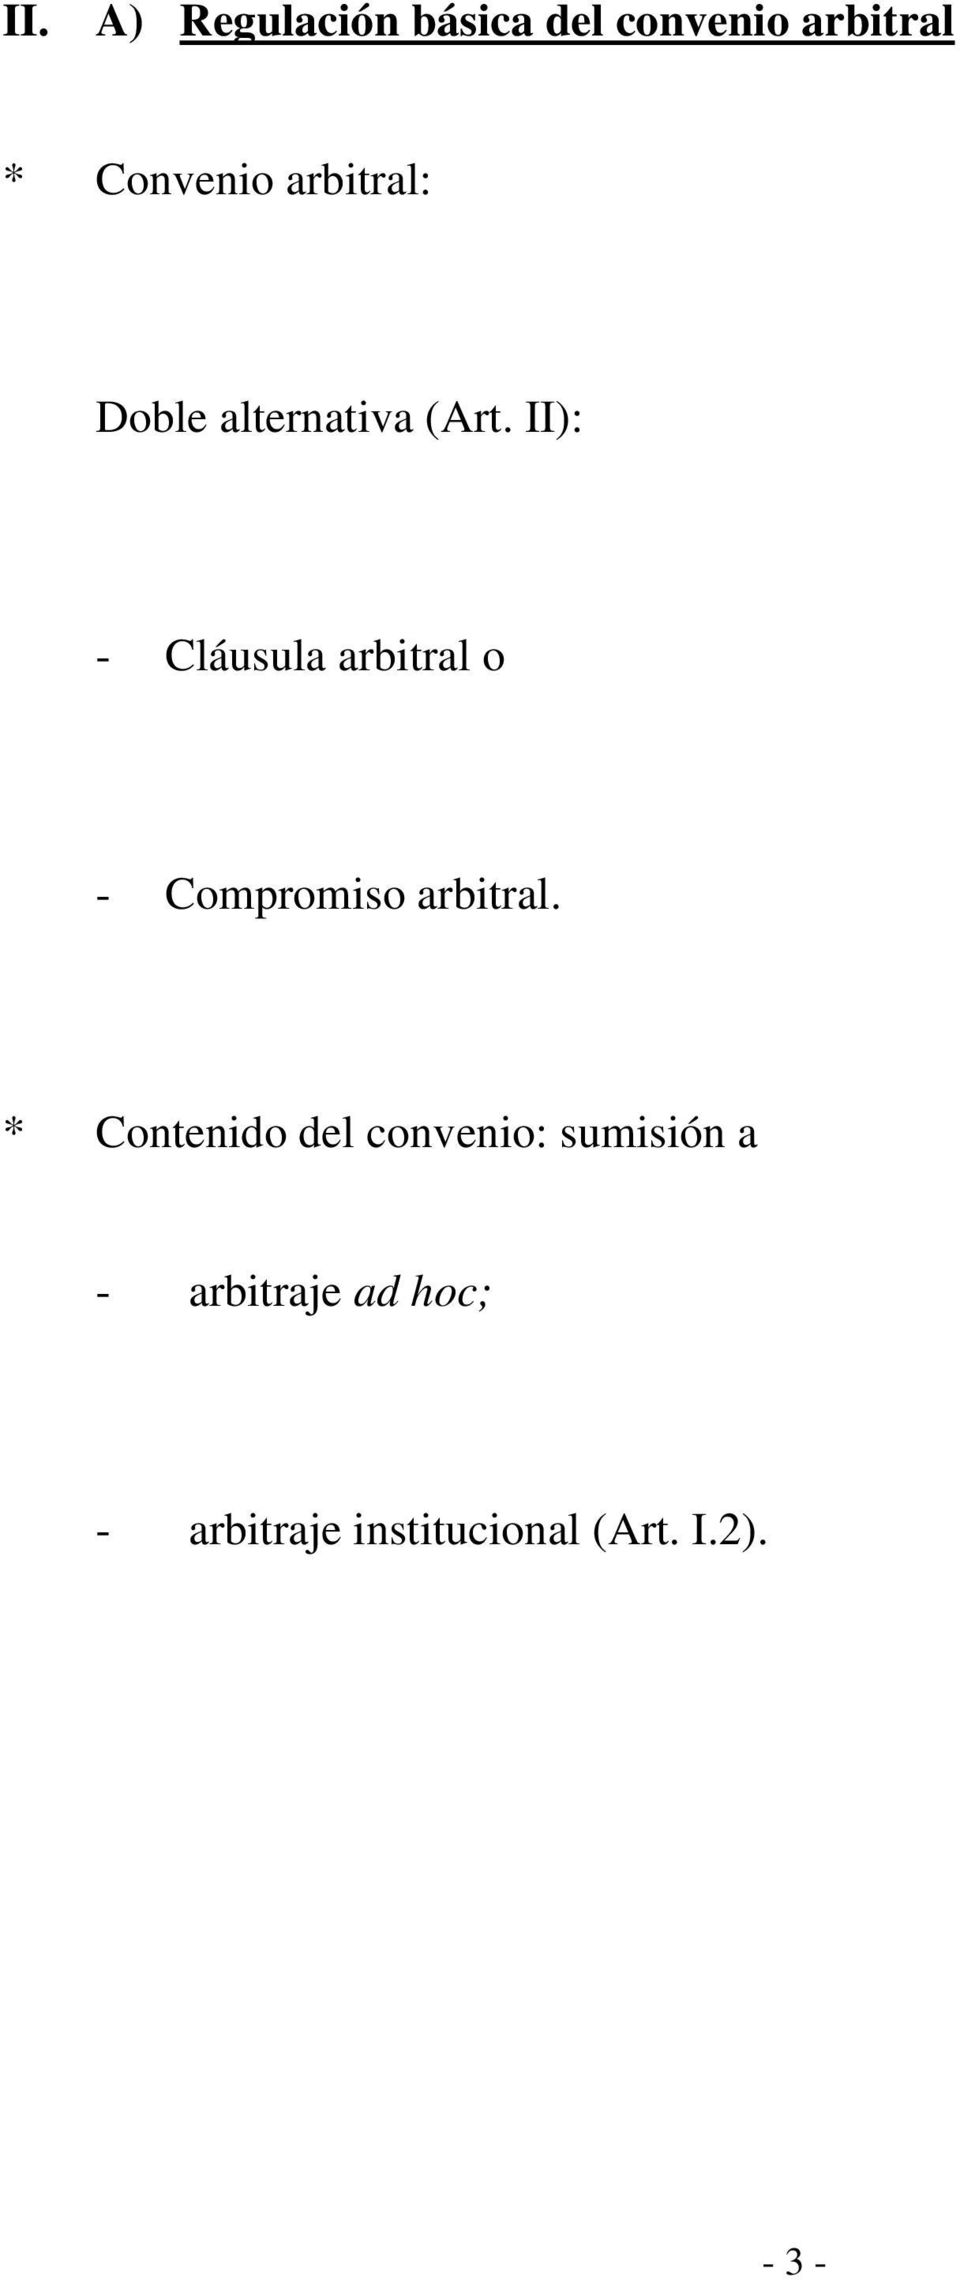 II): - Cláusula arbitral o - Compromiso arbitral.